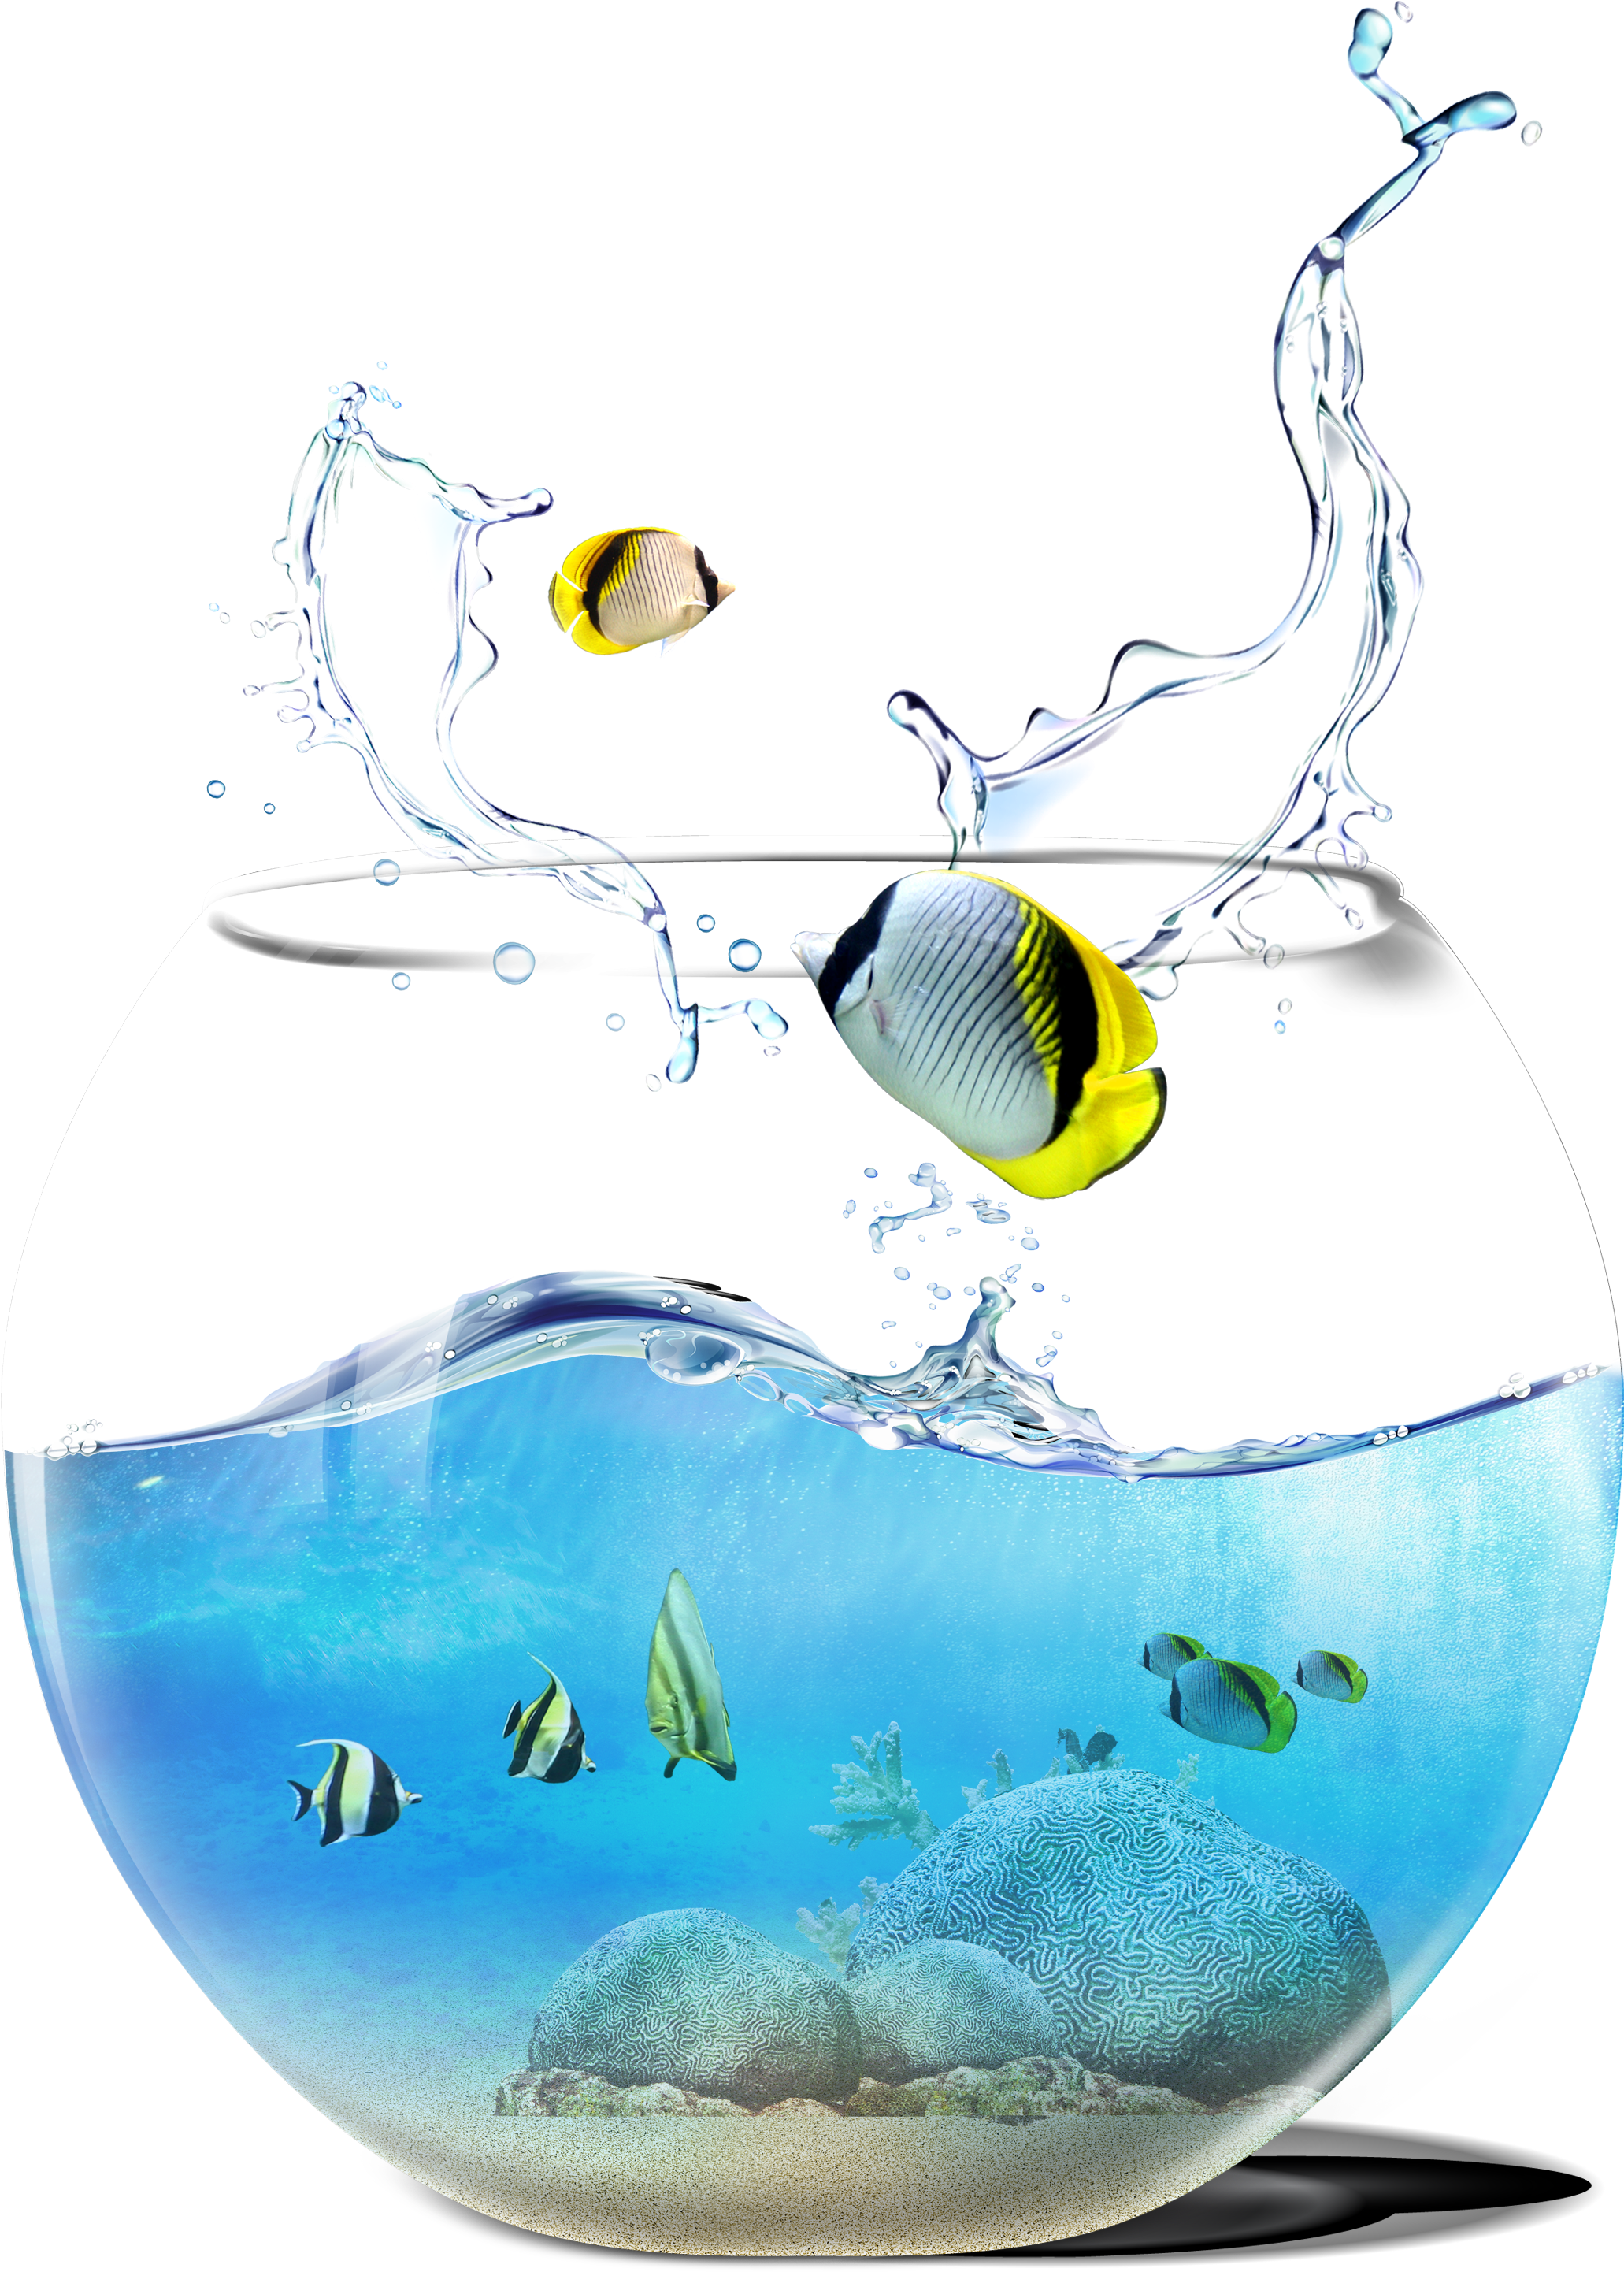 Cutlass Fish Tank - Digital Ph Meter, Sokos 0.01 Ph High Accuracy Water (2796x2999)